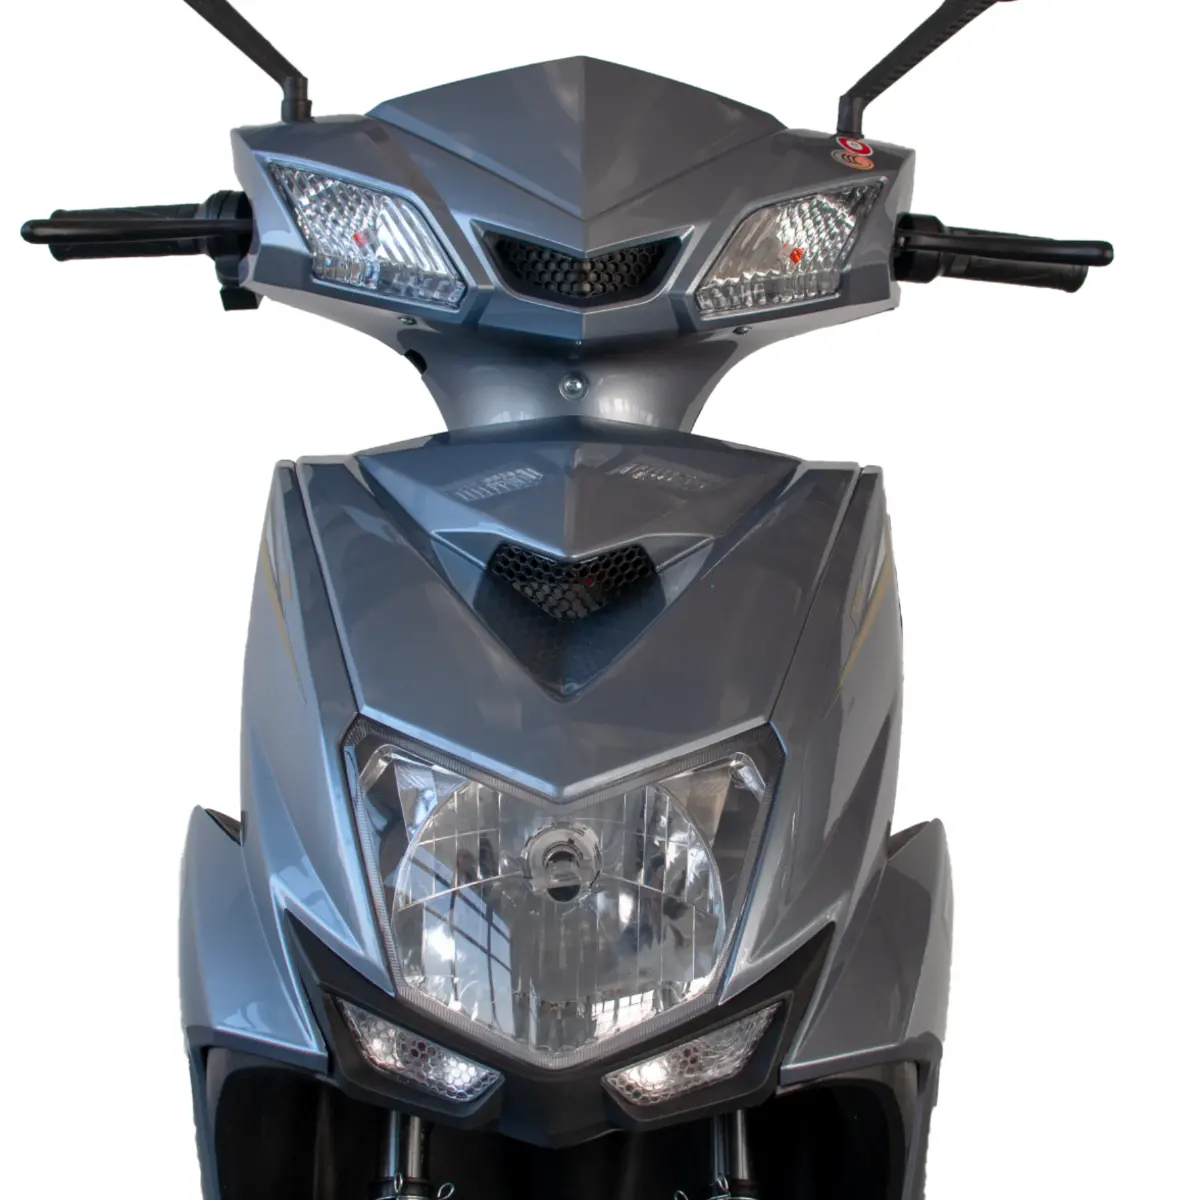 FORMA ขายร้อนความเร็วสูง Motos จักรยาน 1000w 60 กม./ชม.รถจักรยานยนต์ไฟฟ้า Moto Electrica ราคาดี